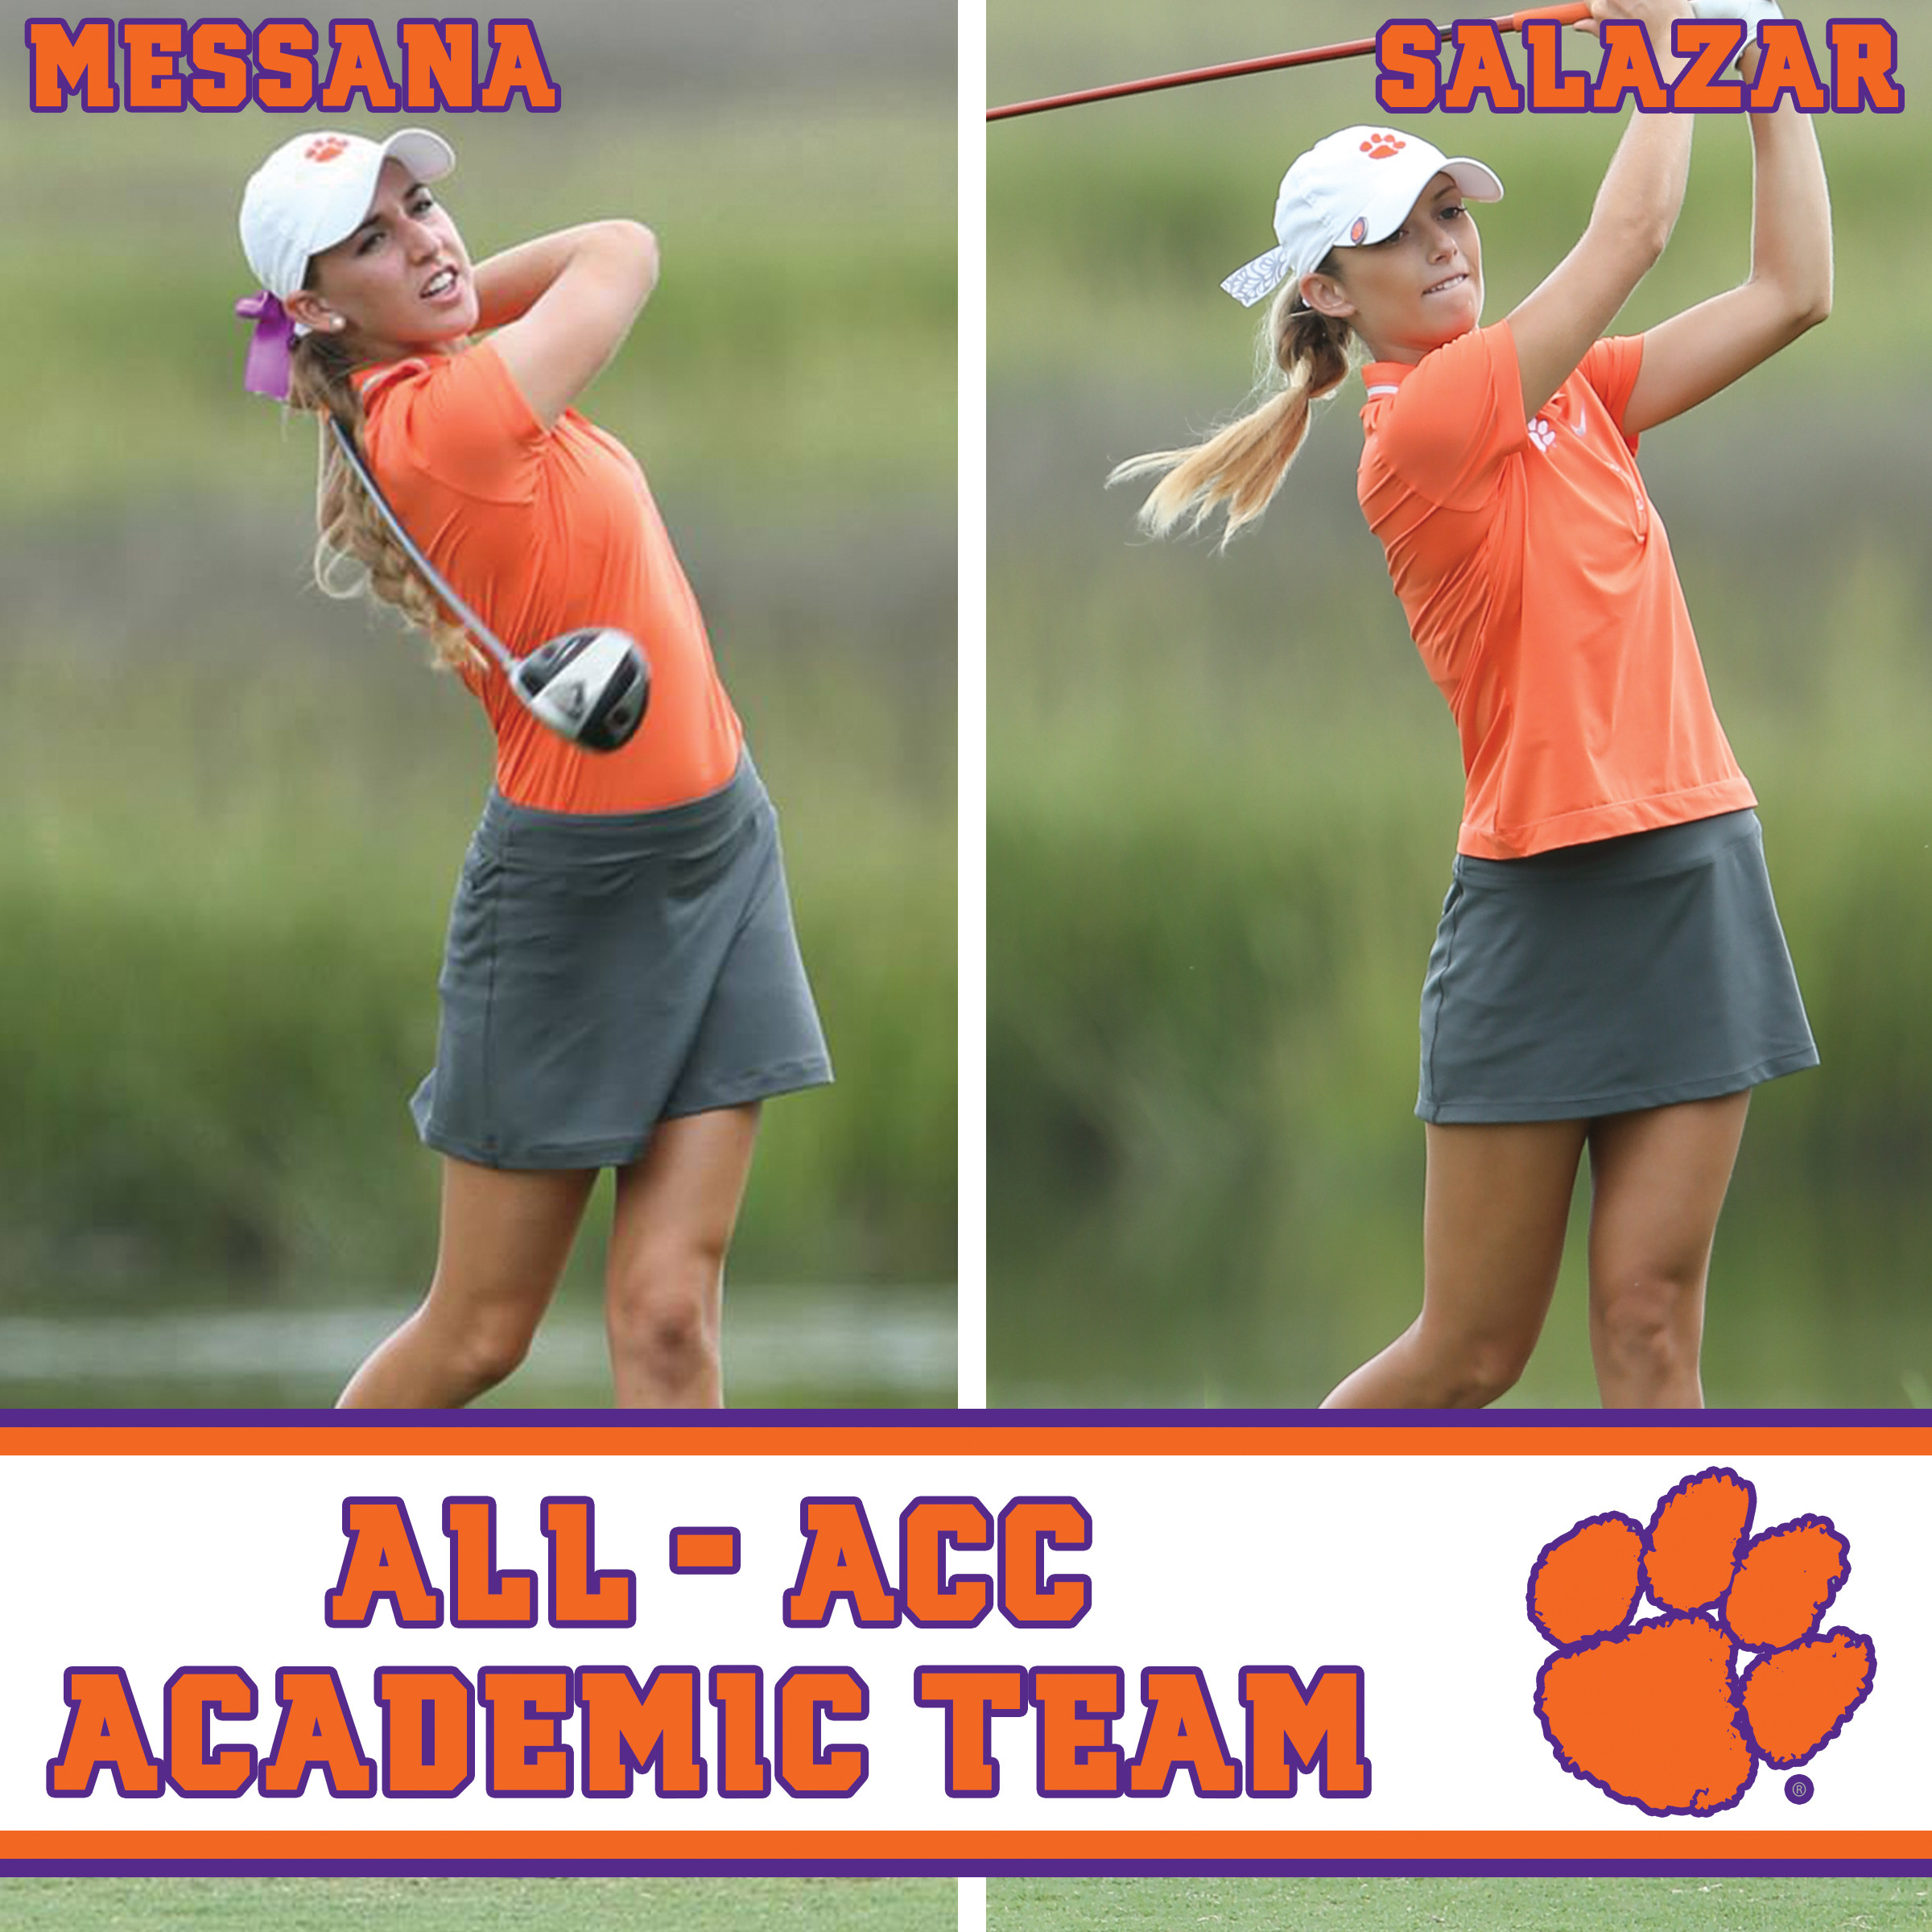 Salazar and Messana Named Academic All-ACC